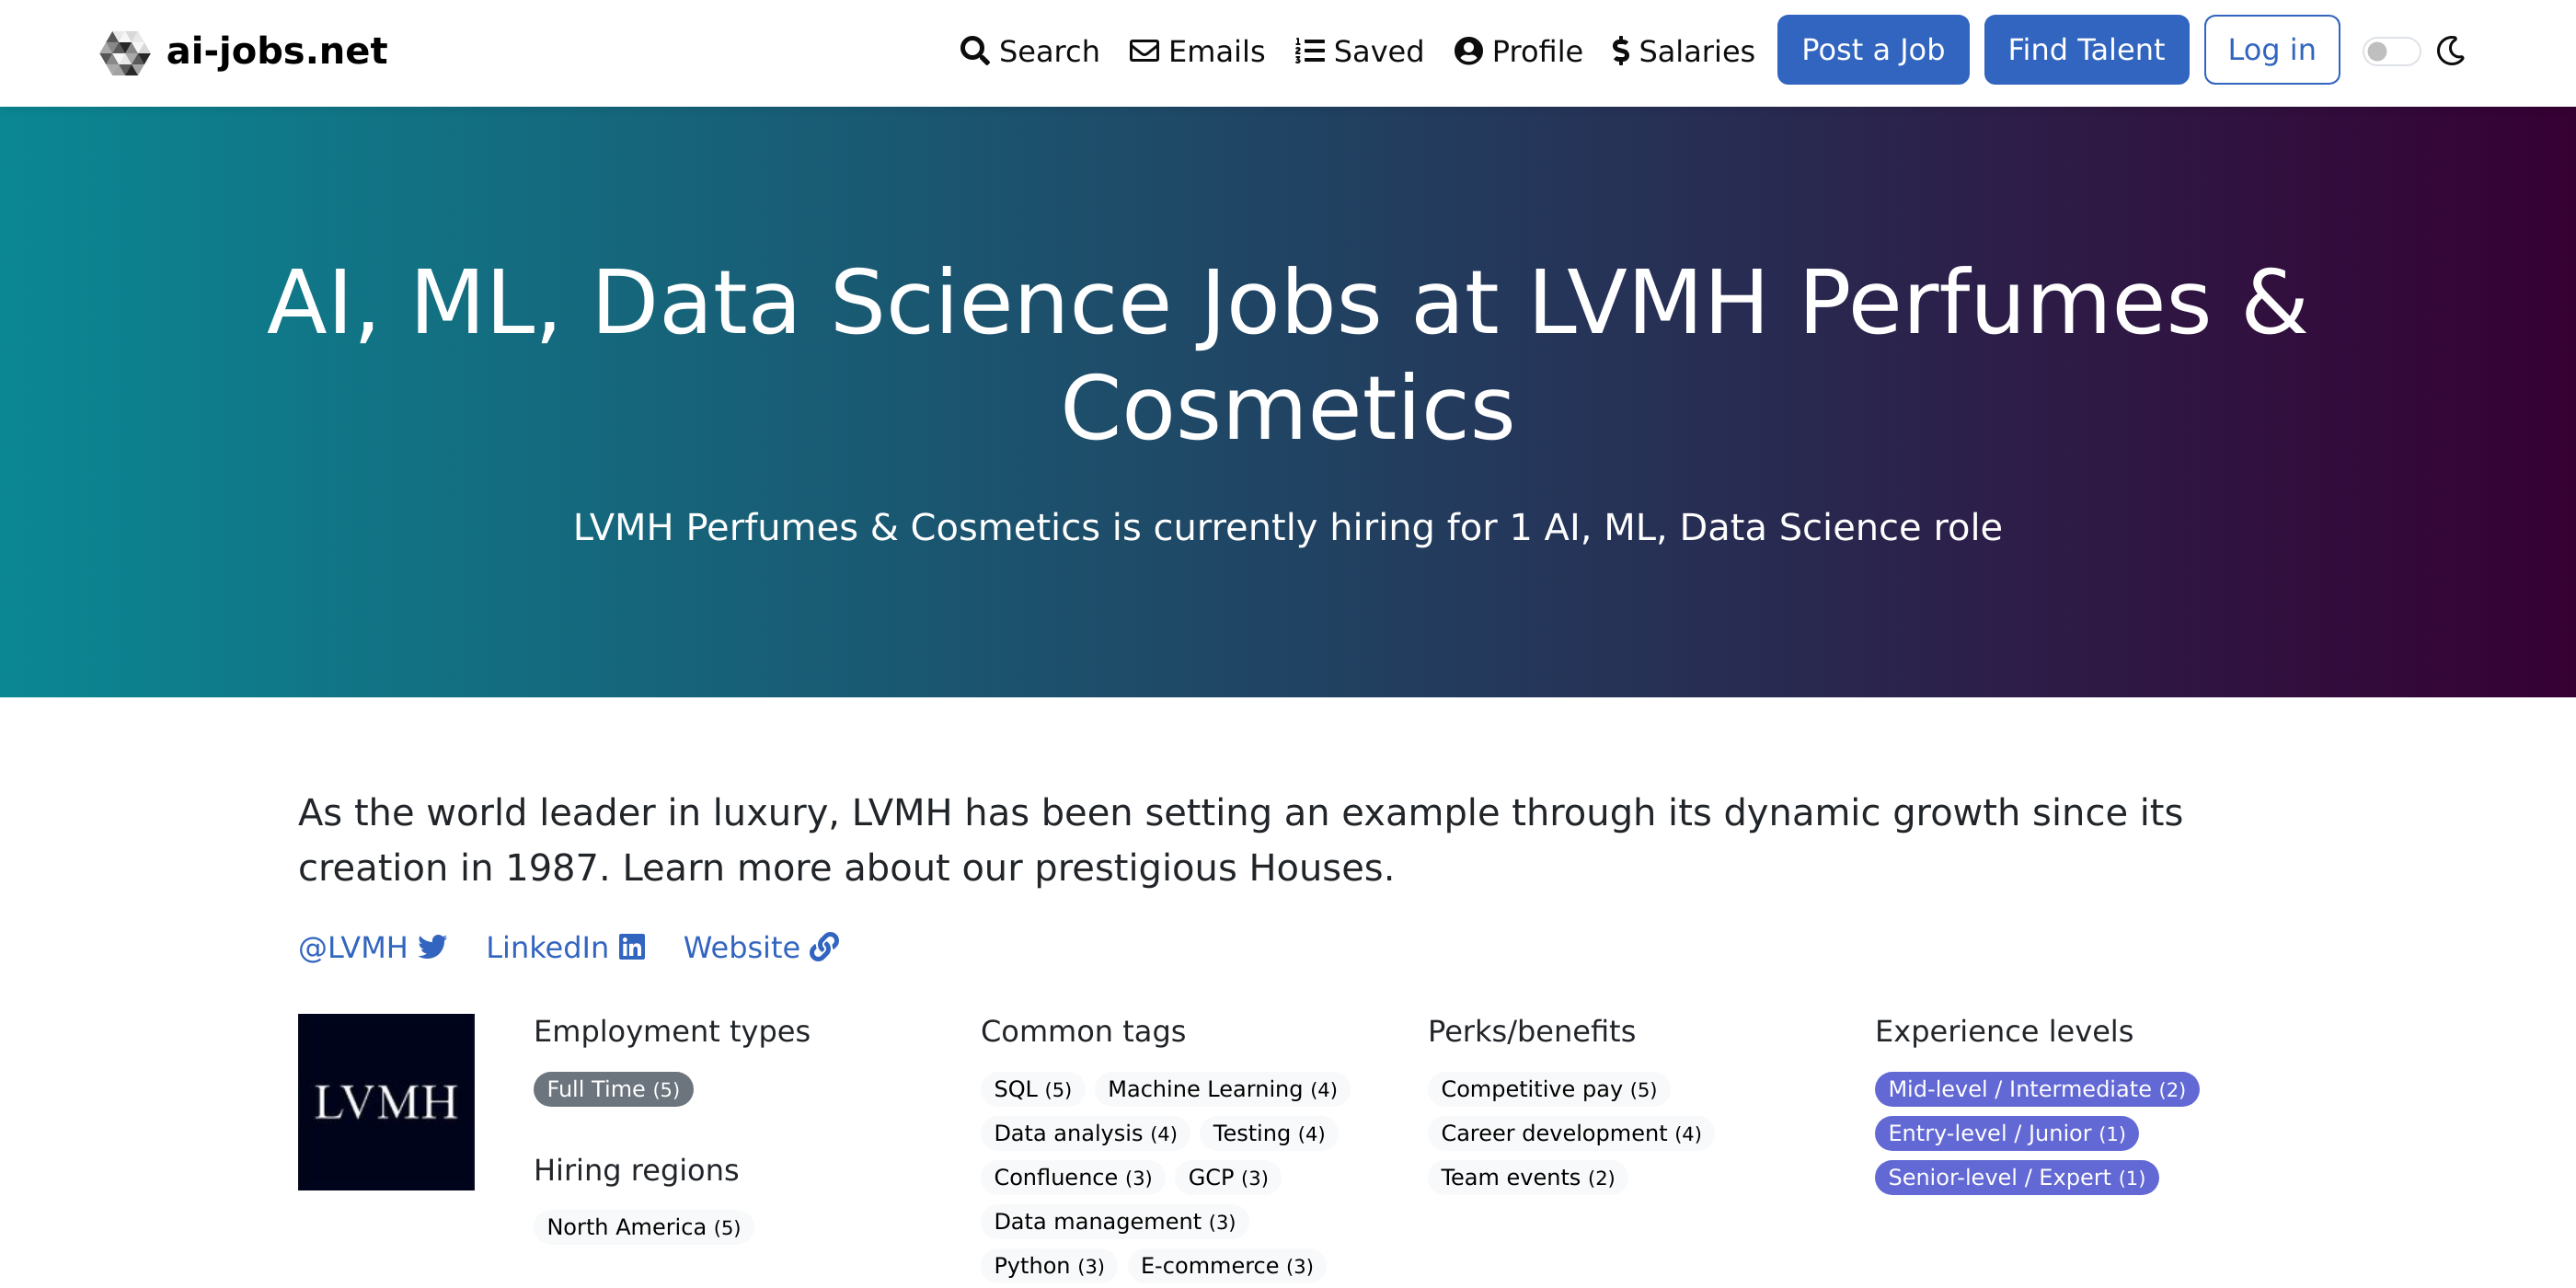 AI, ML, Data Science Jobs at LVMH Perfumes & Cosmetics